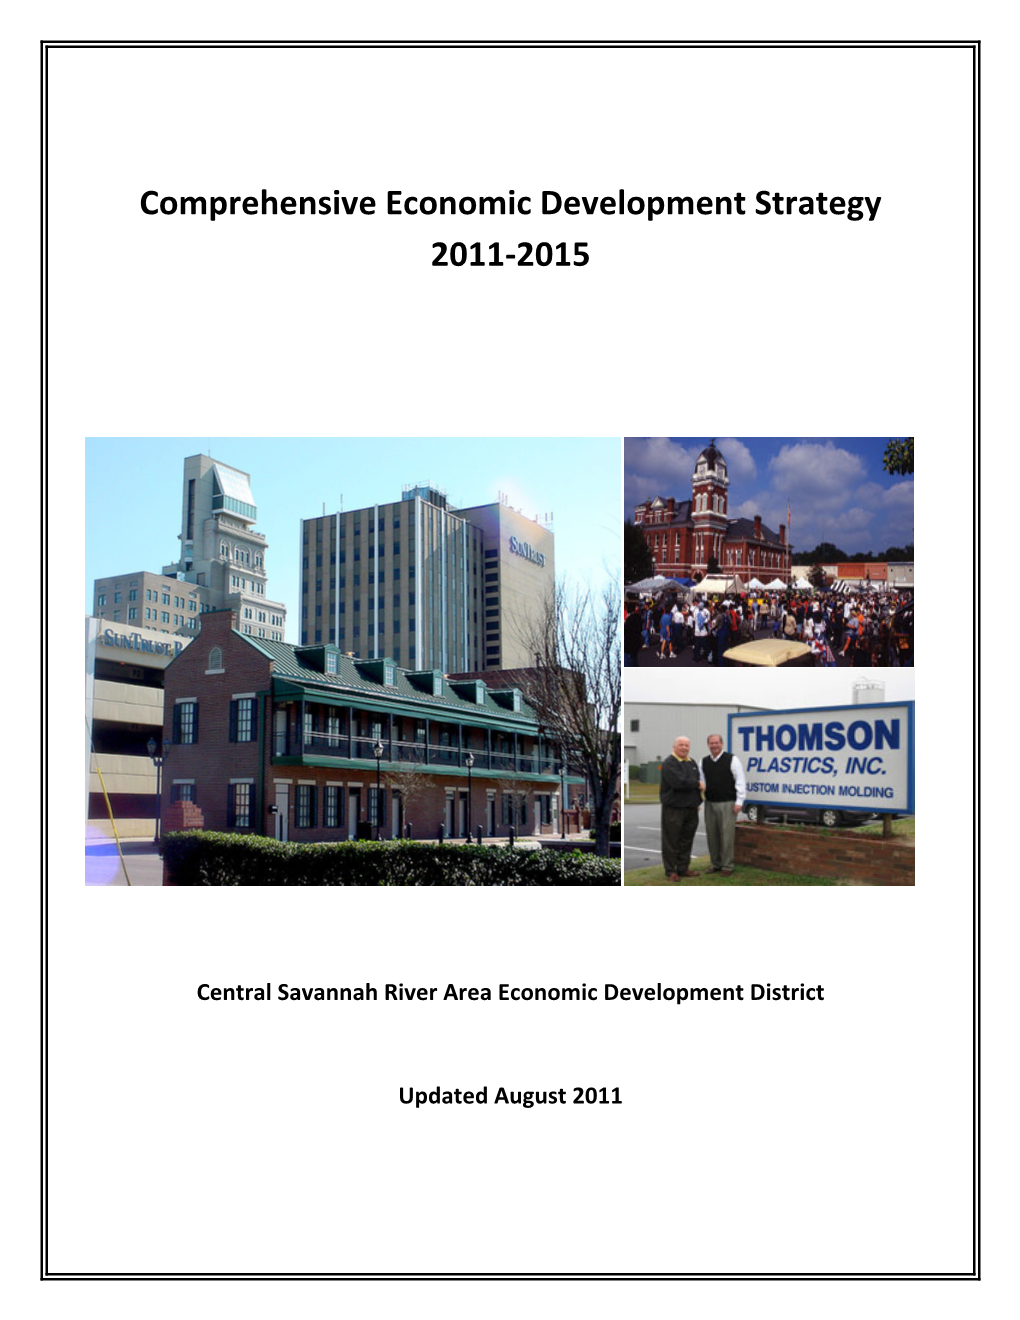 Comprehensive Economic Development Strategy 2011-2015